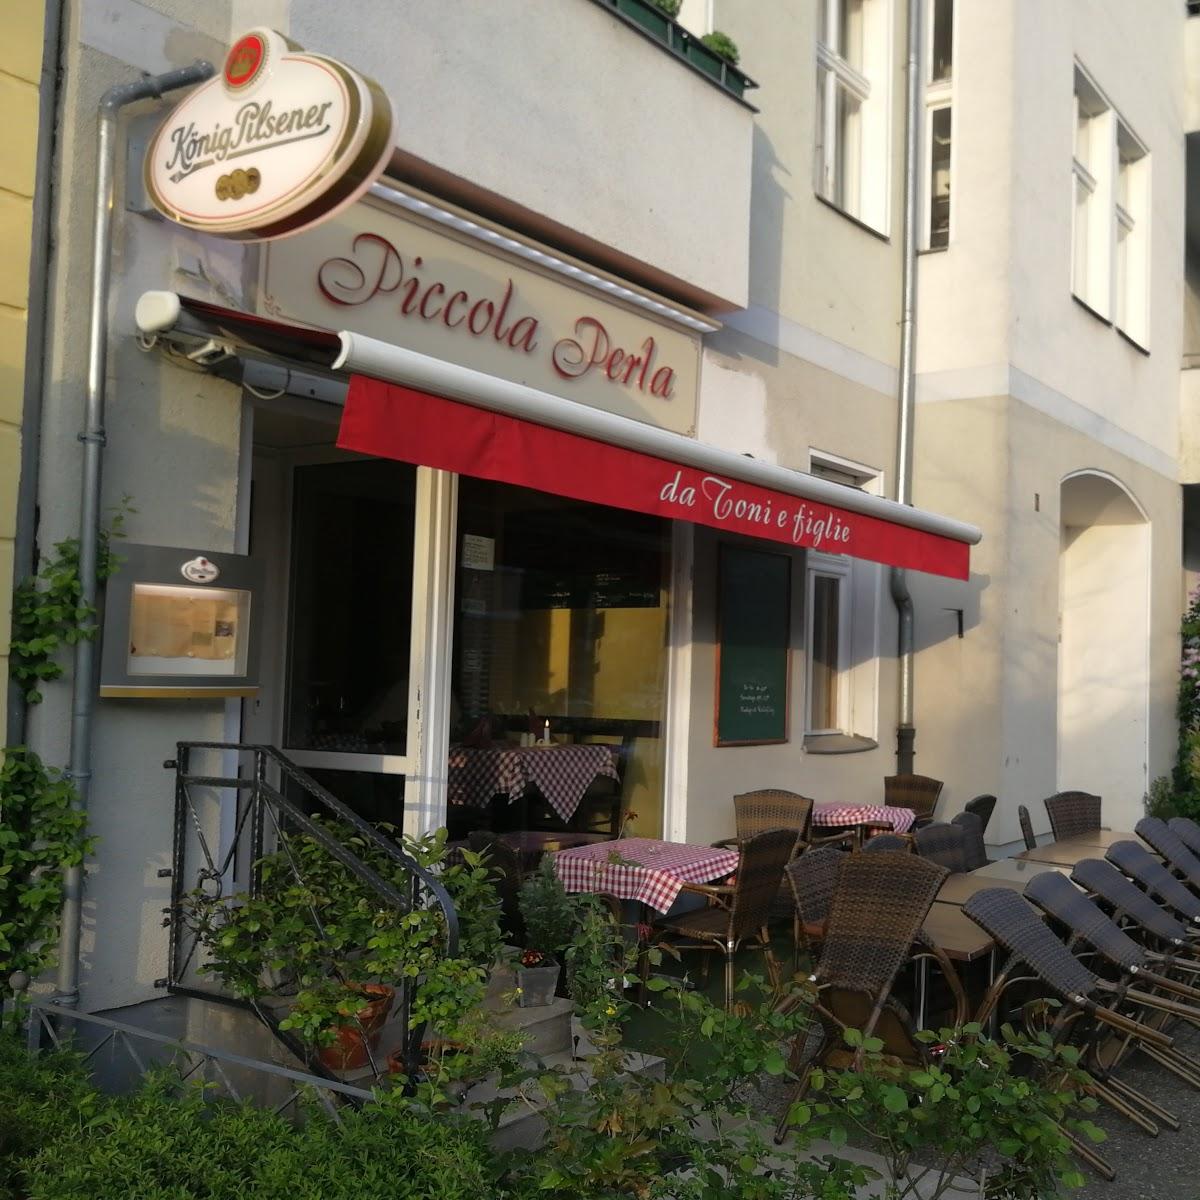 Restaurant "La Piccola Perla" in Berlin